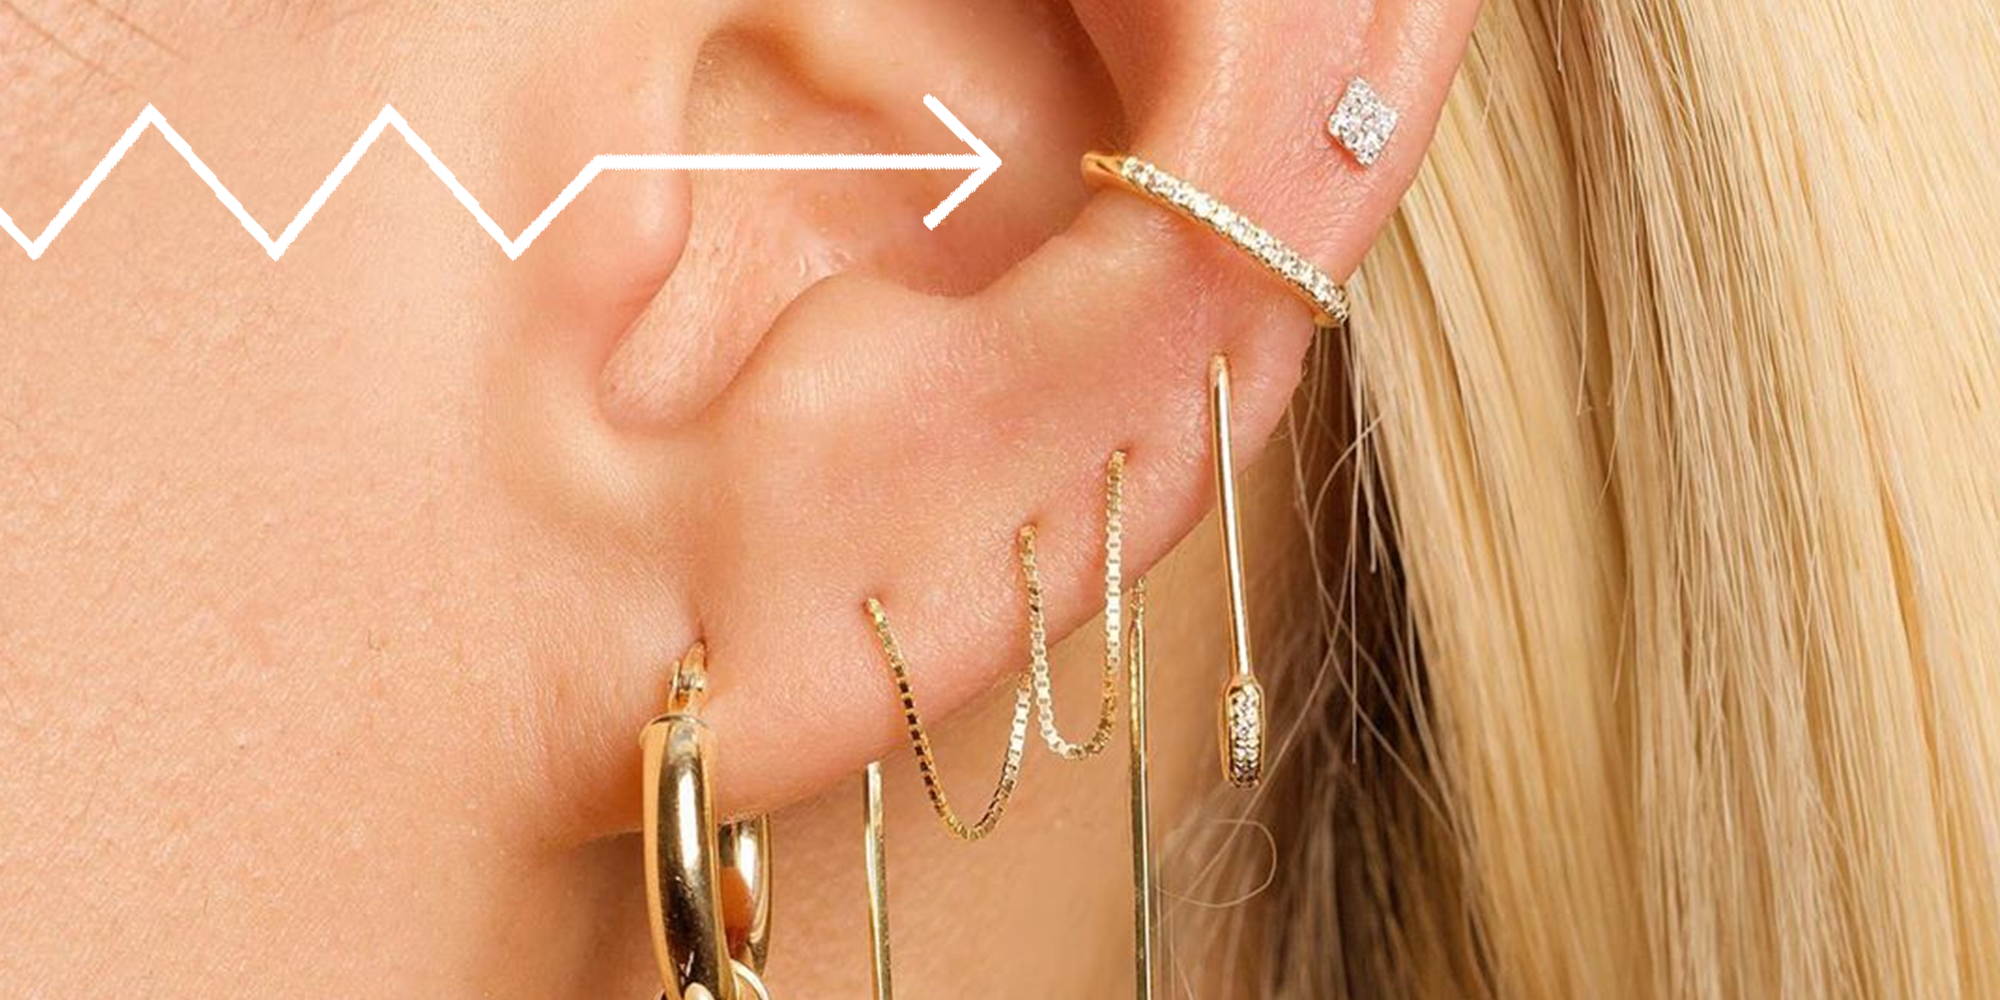 Ear Piercing Chart For Health